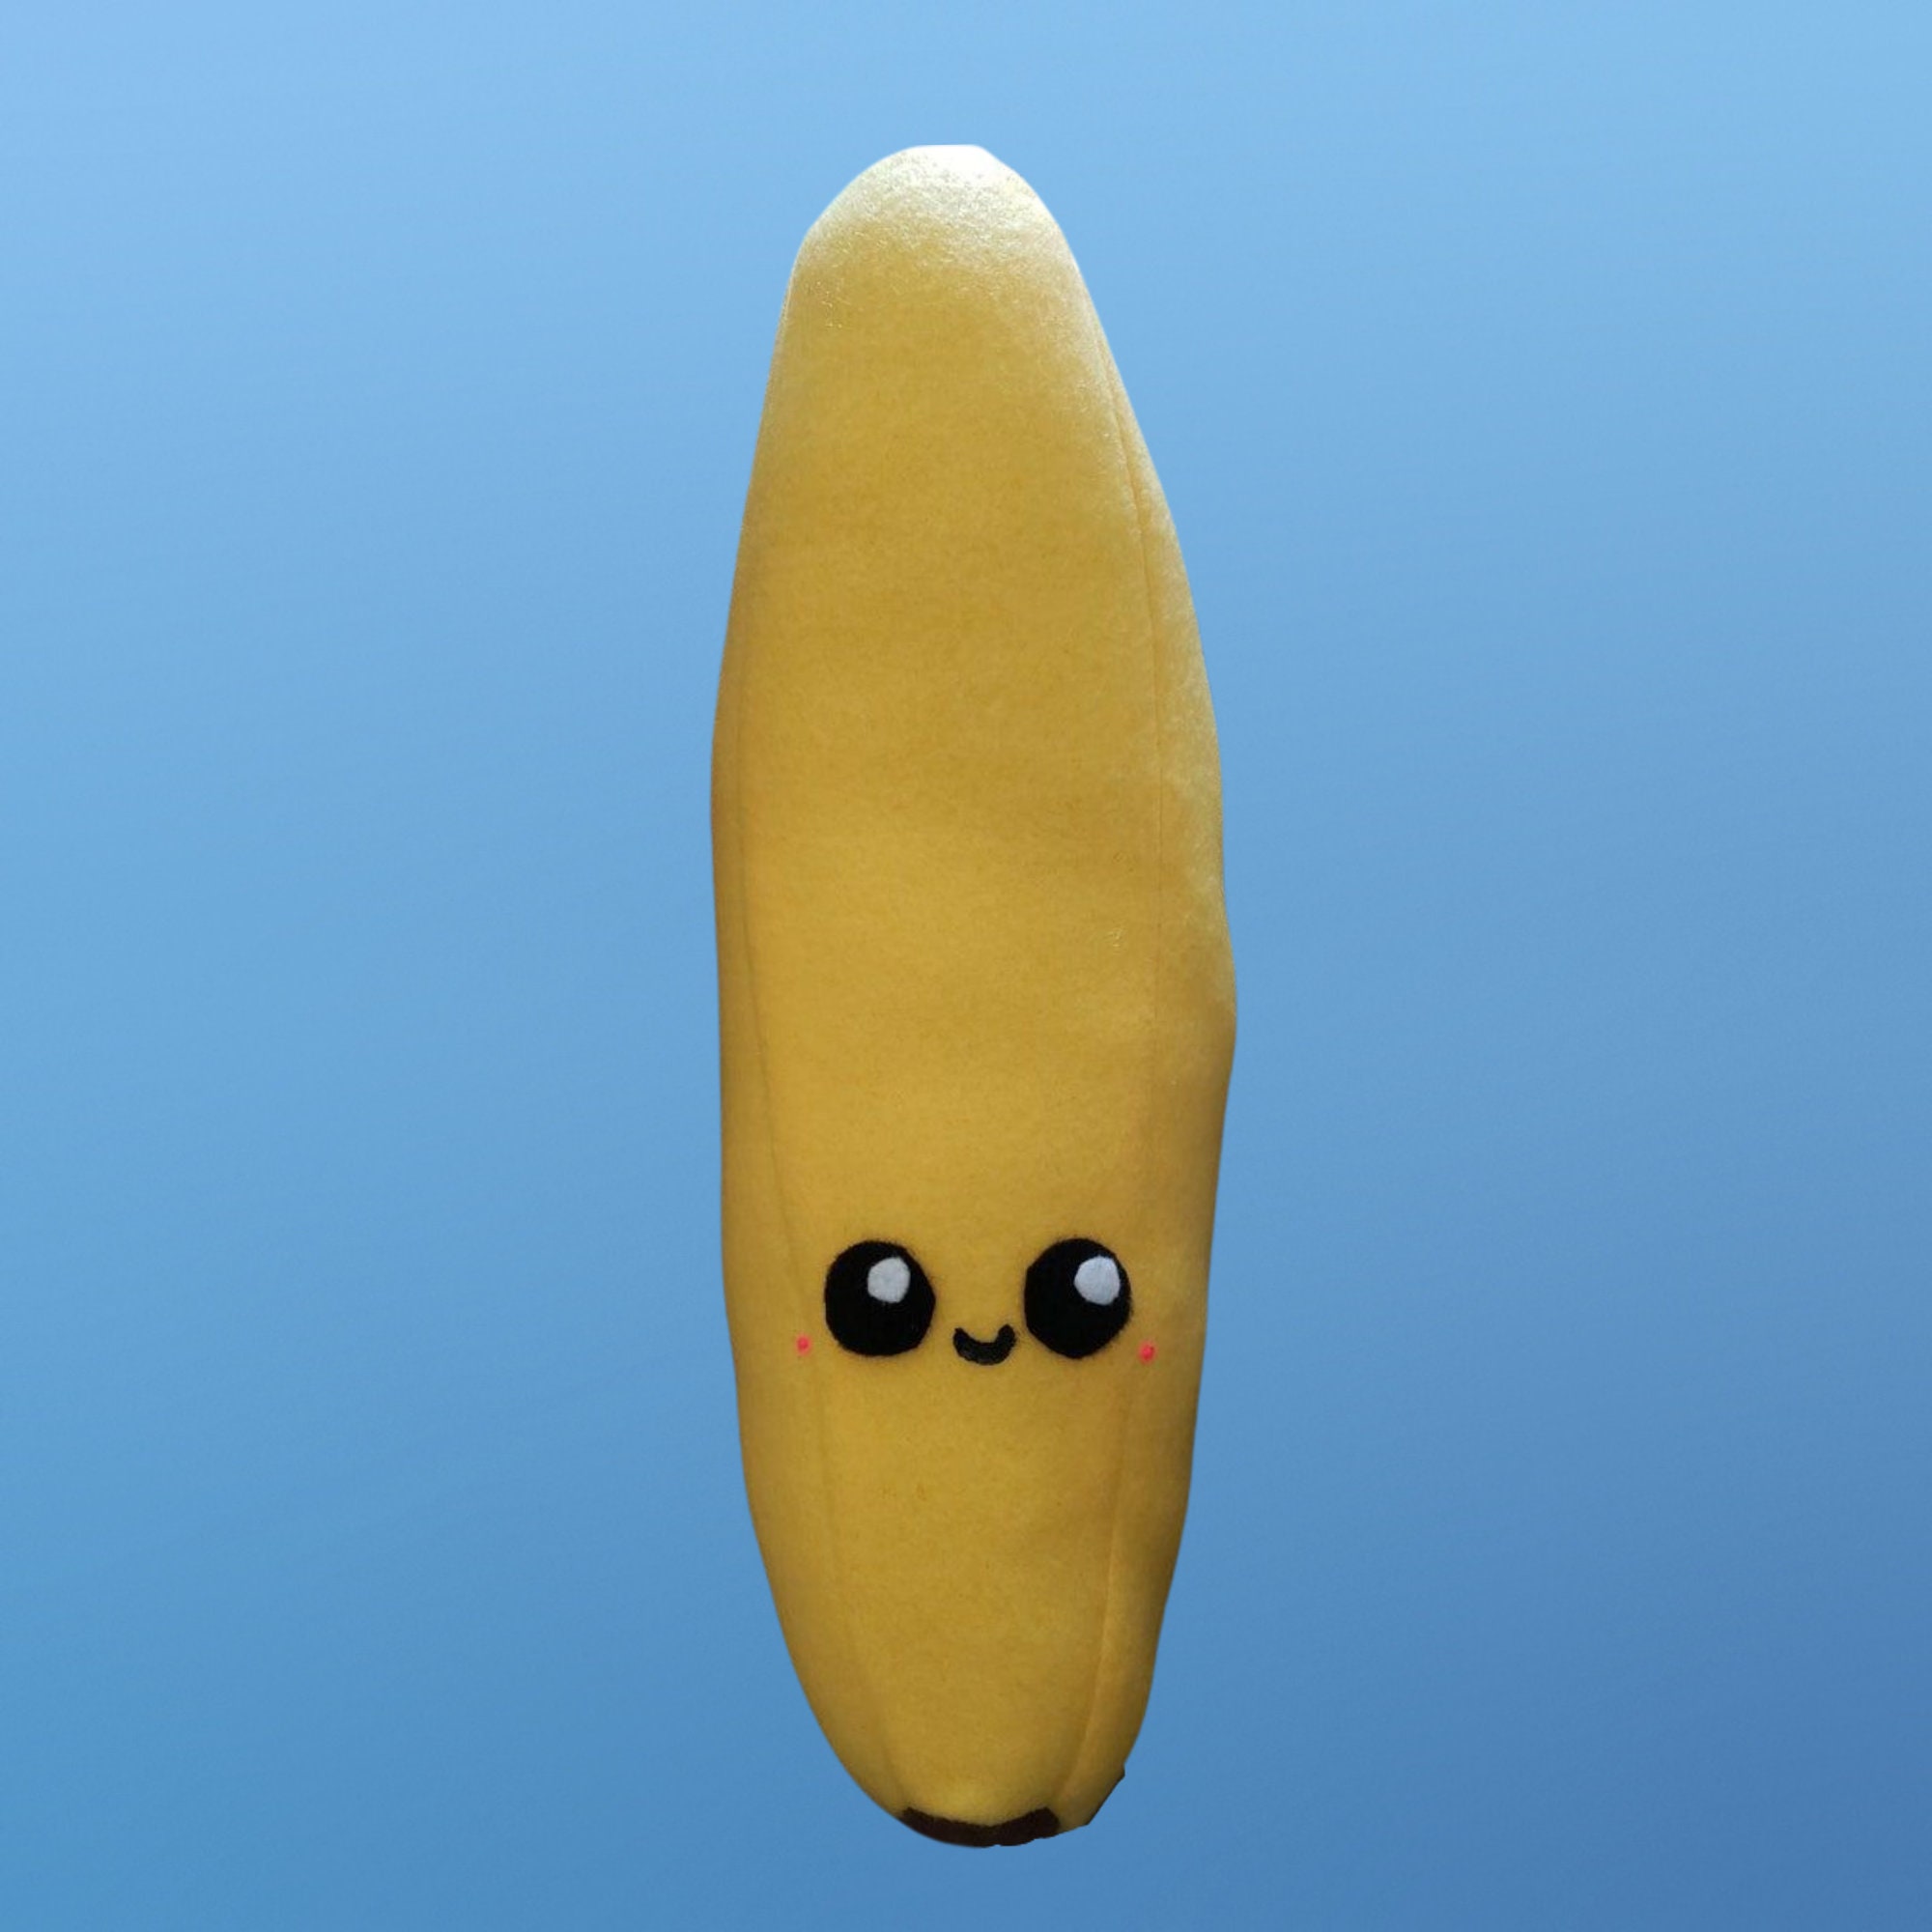 Kawaii Therapy Fruit Series Banana Plush XL (65cm)